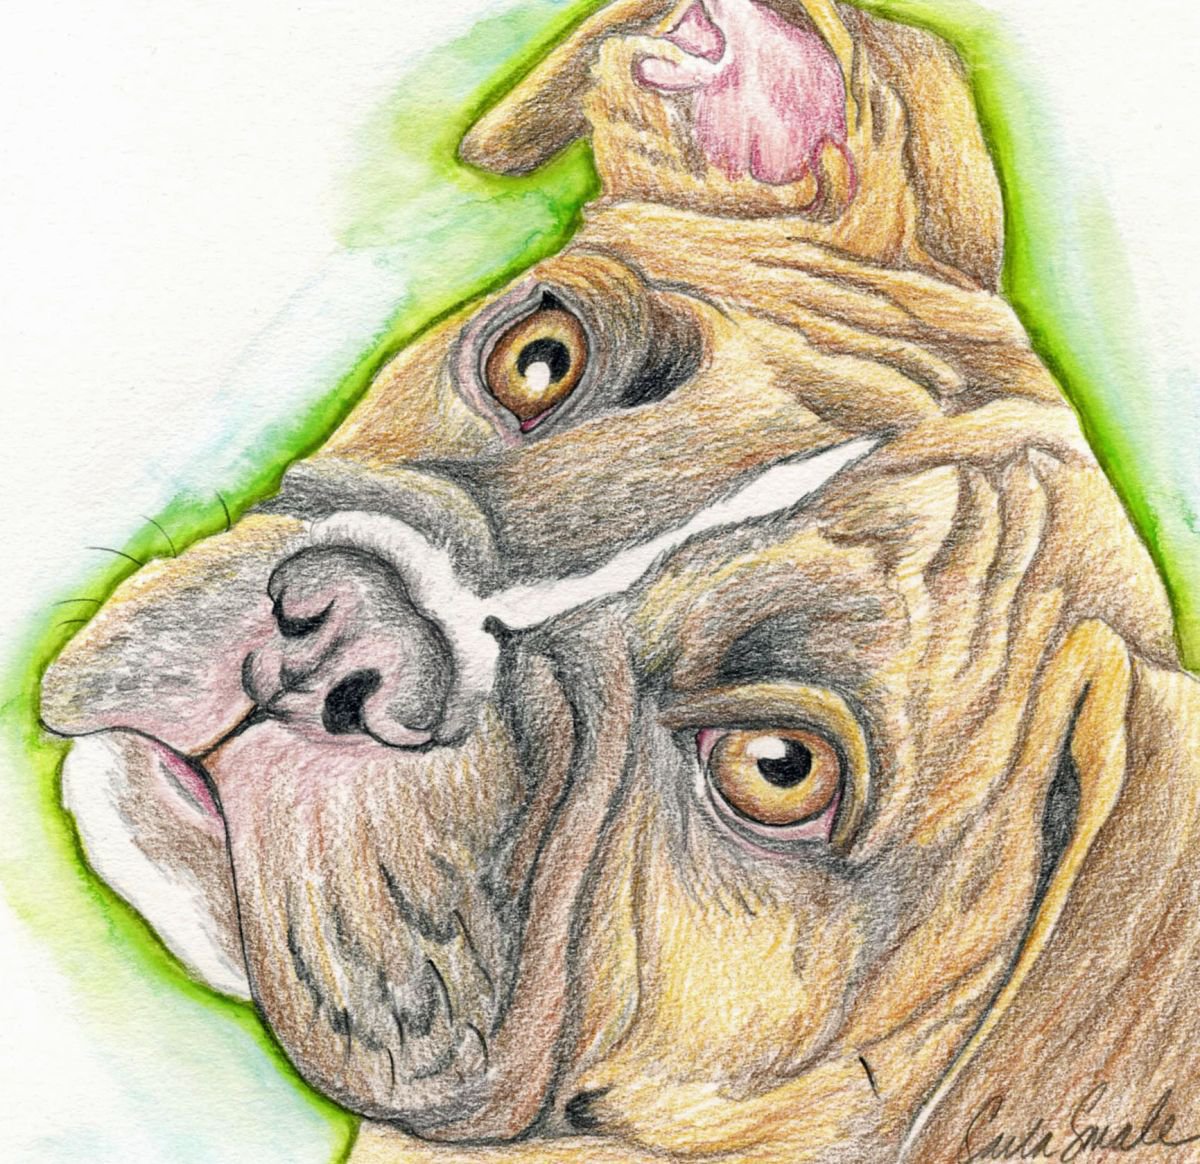 Boxer Pet Dog Original Drawing 6 x 6 Inches-Carla Smale by carla smale